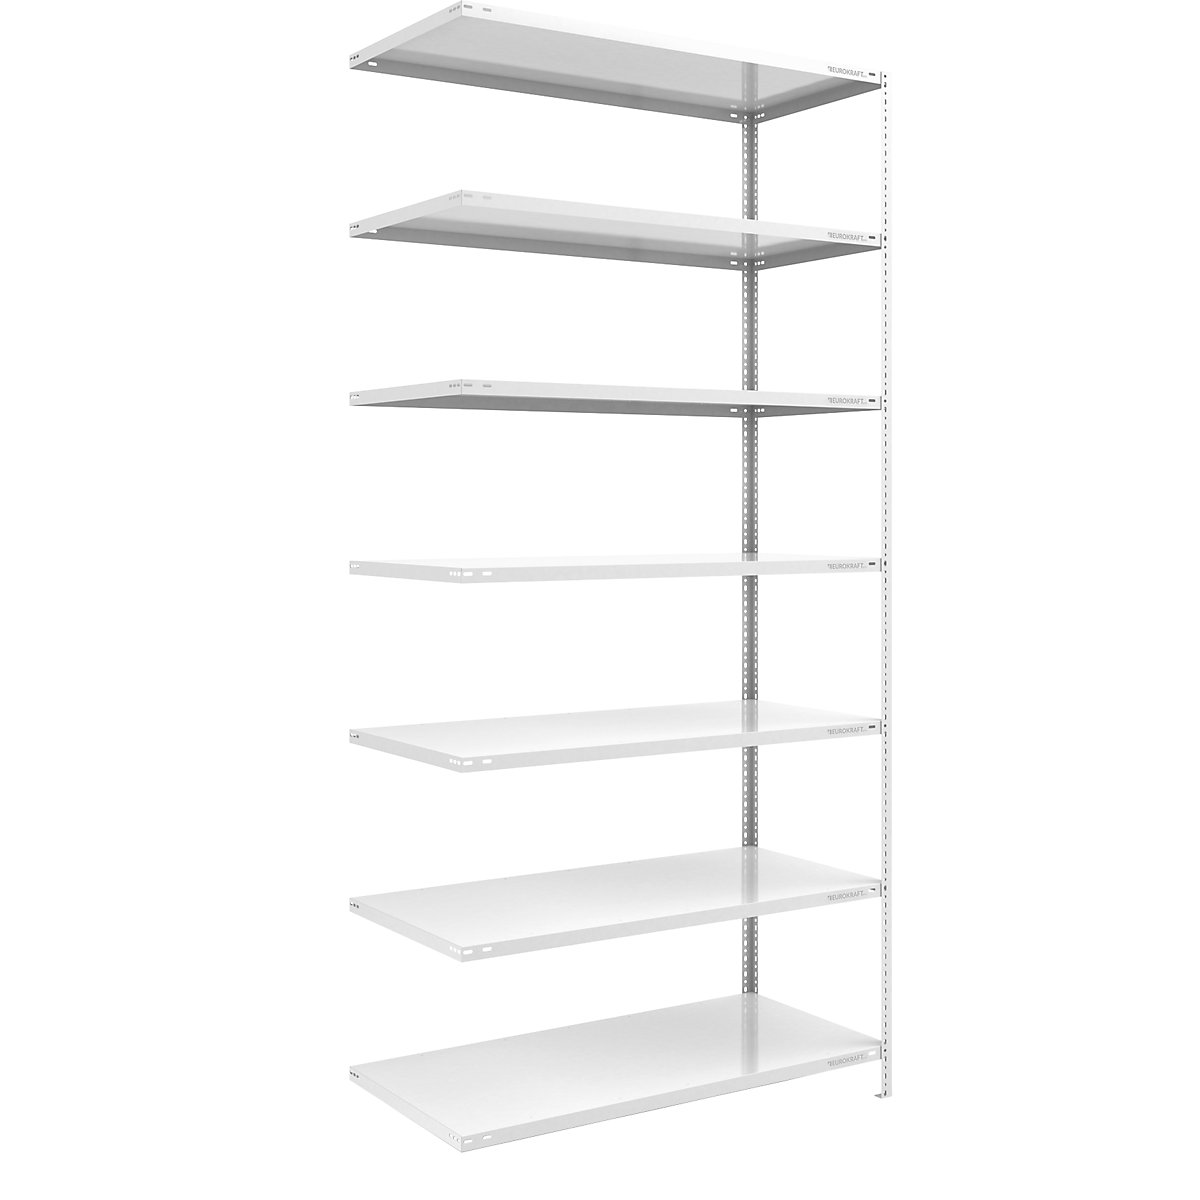 Bolt-together storage shelving, RAL 7035, medium duty – eurokraft pro, shelf unit height 3000 mm, shelf width 1300 mm, depth 800 mm, extension shelf unit-10